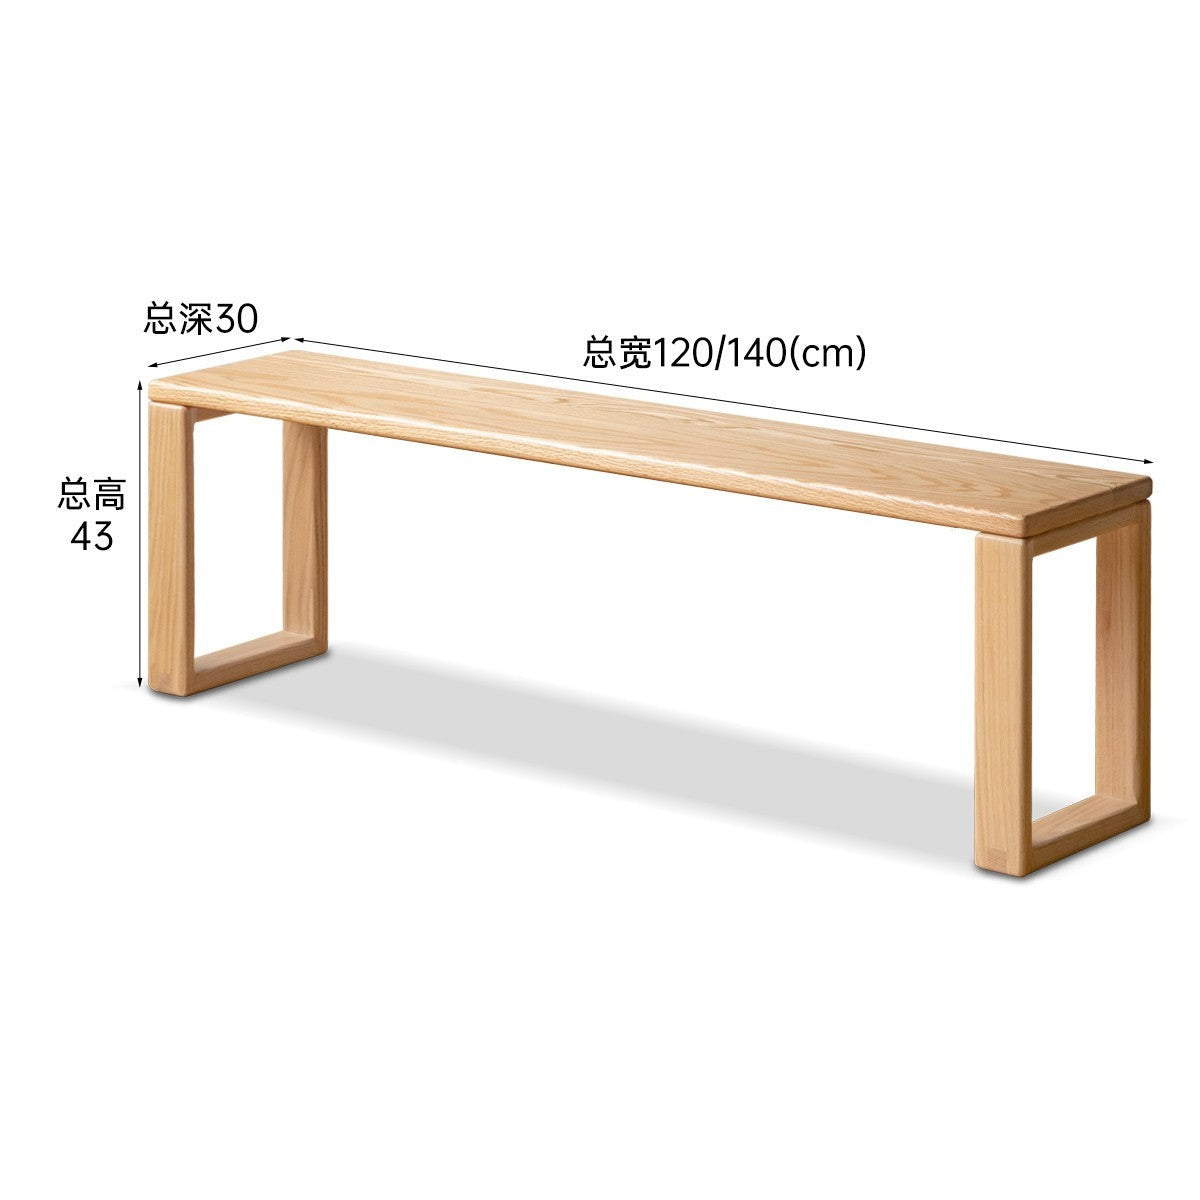 Oak solid wood long bed end bench